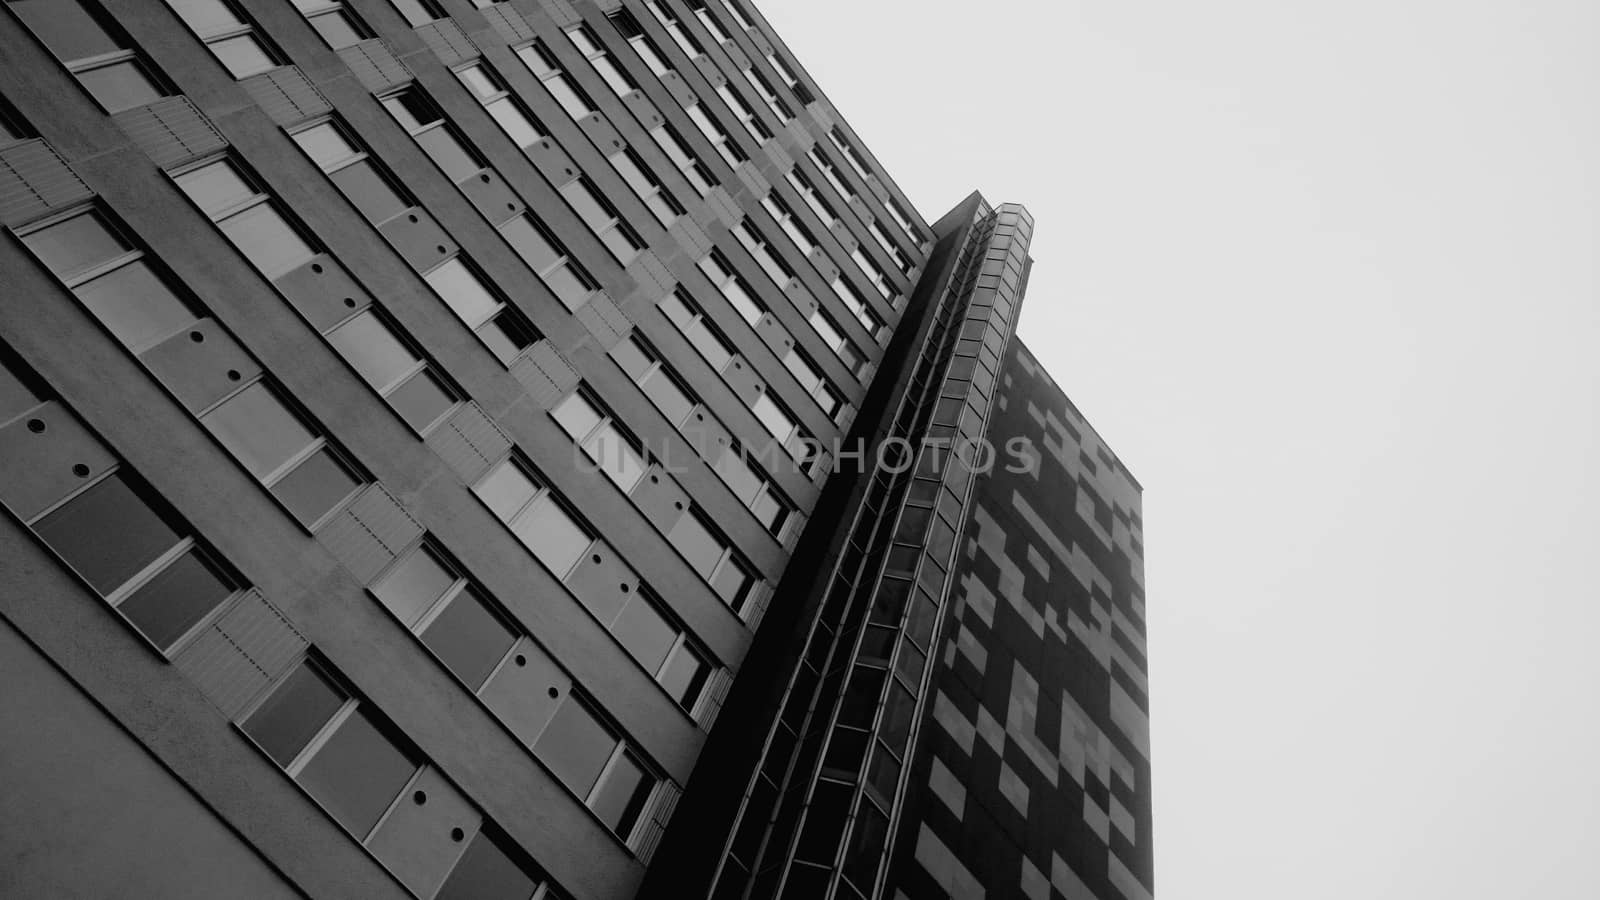 Skyscraper exterior view by hamik